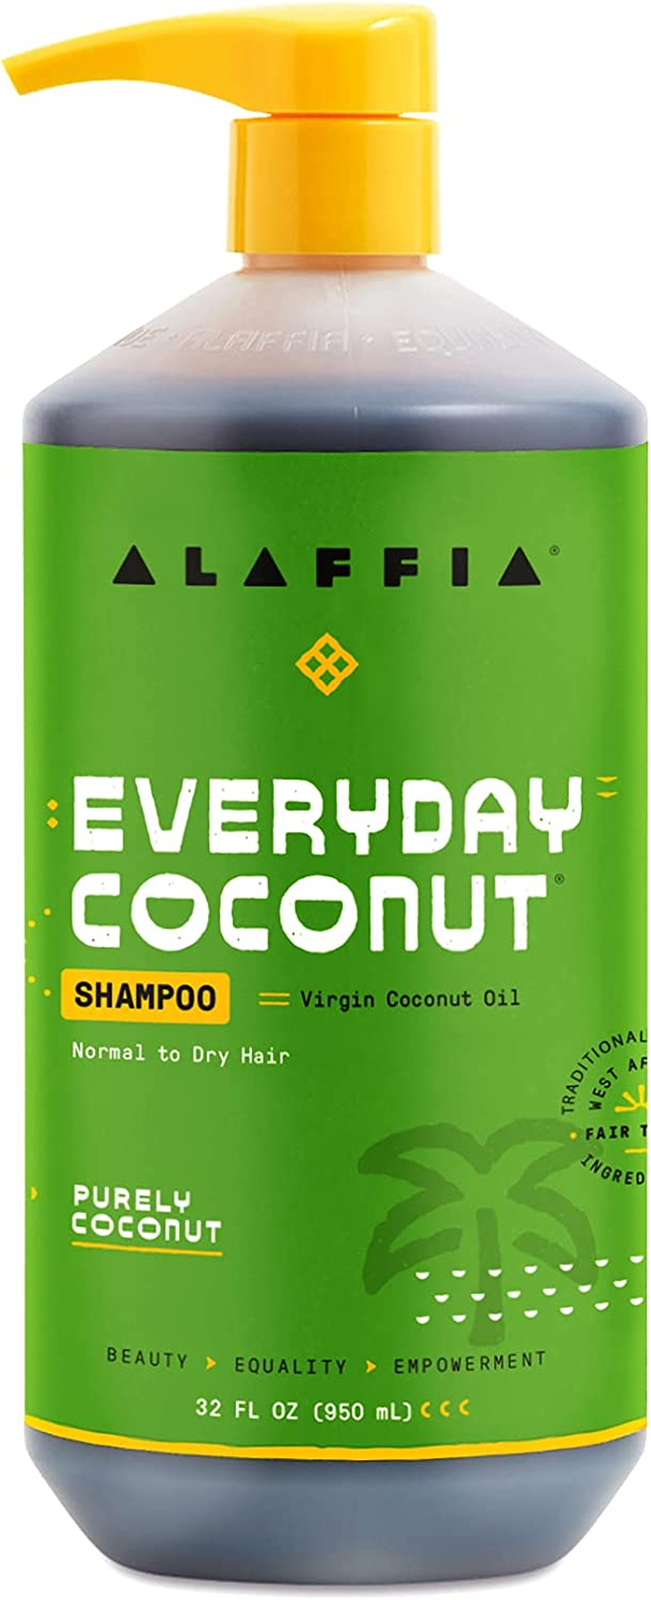 Alaffia Everyday Shea Shampoo (Purely Coconut) - 950mL